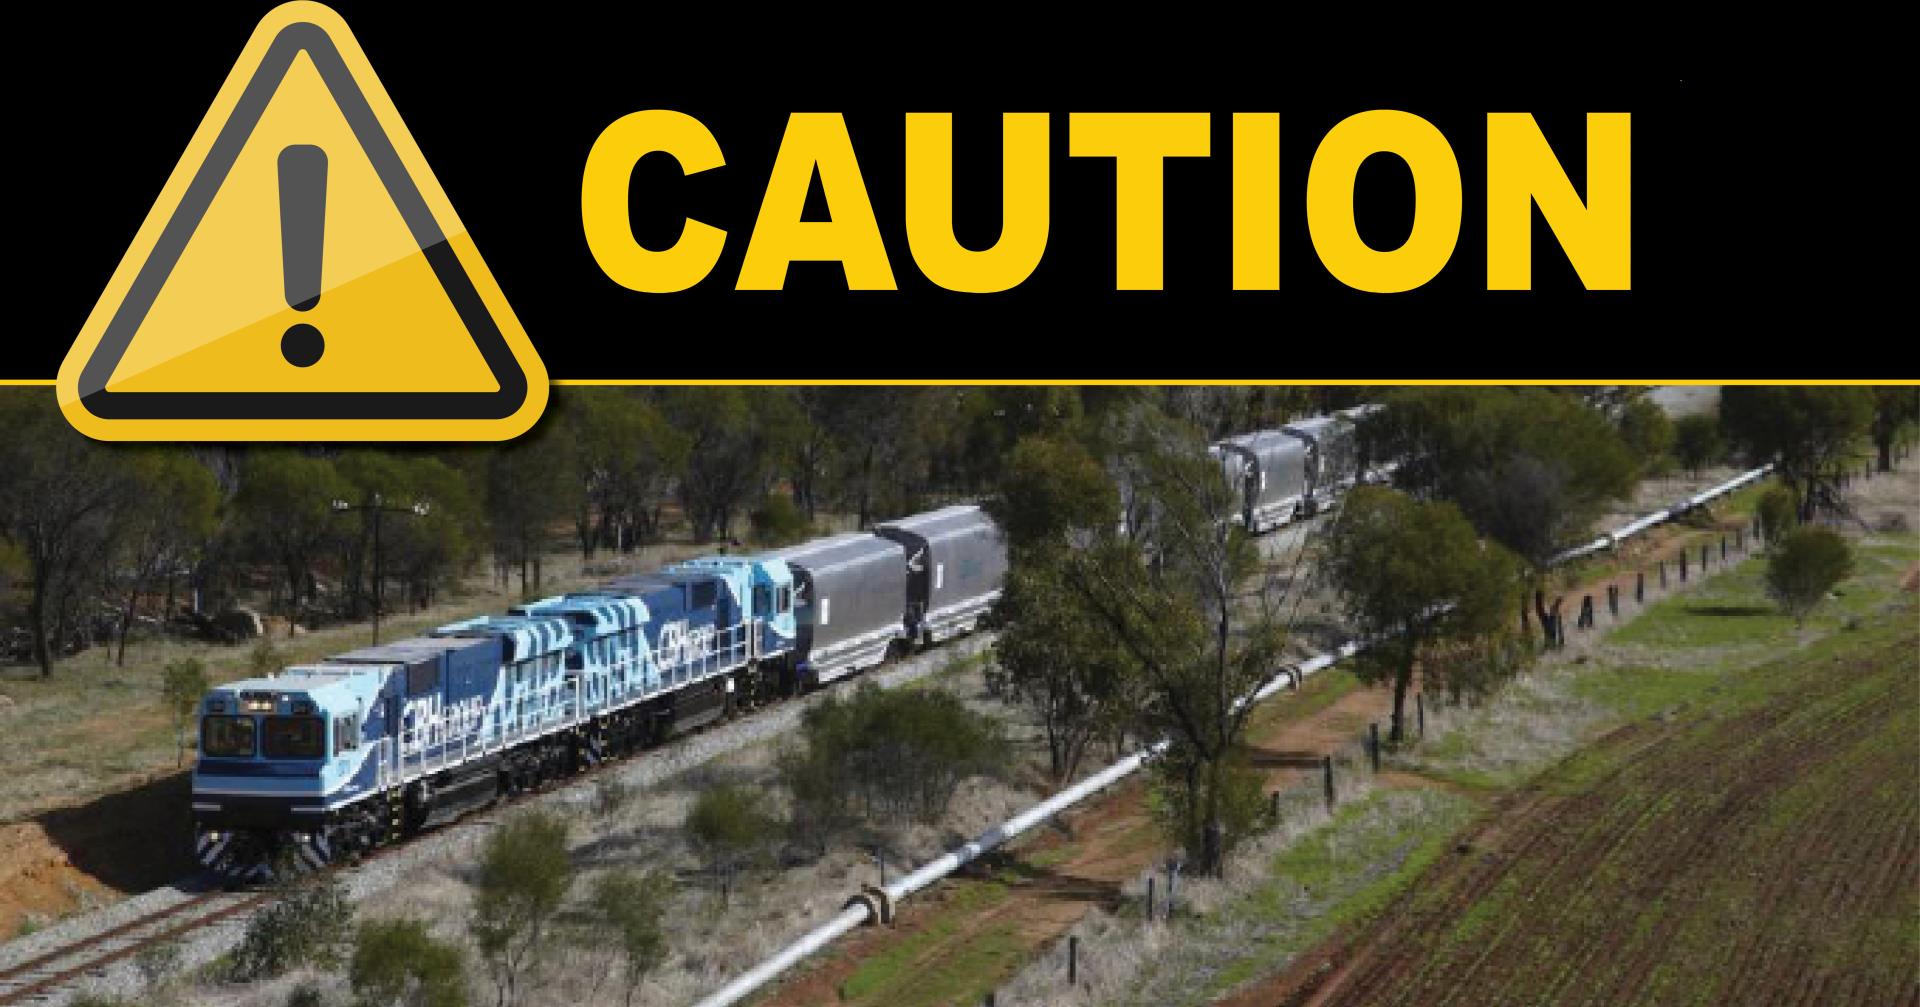 Rail Safety Message - BE VIGILANT